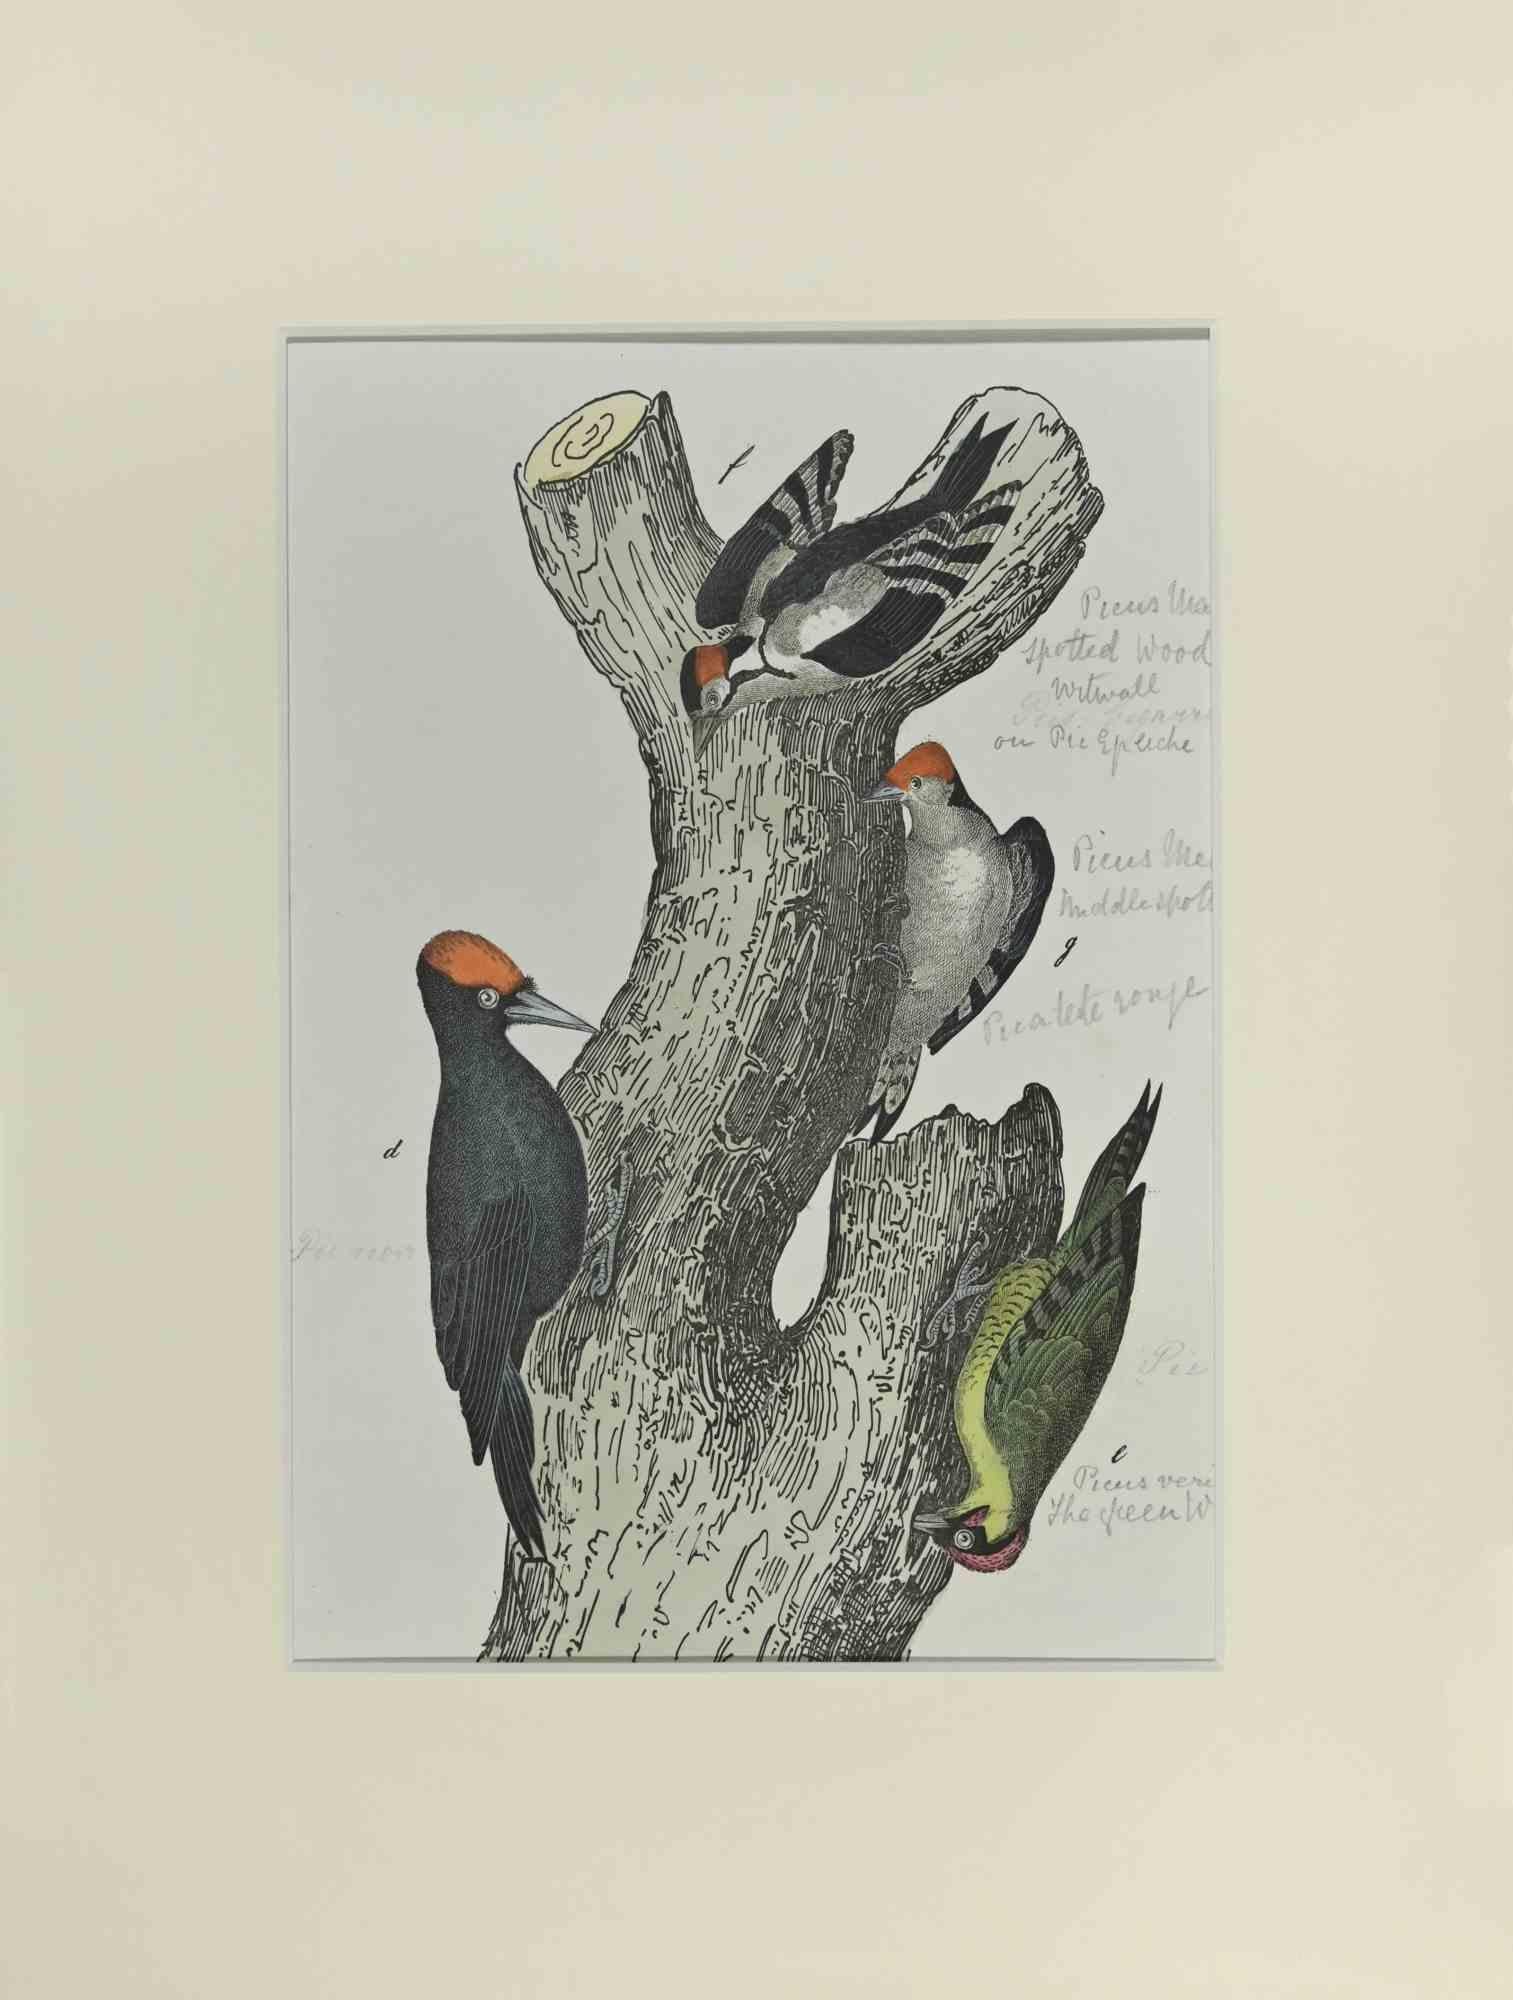 Spotted Woodpecker is an Etching hand colored realized by Gotthilf Heinrich von Schubert - Johann Friedrich Naumann, Illustration from Natural history of birds in pictures, published by Stuttgart and Esslingen, Schreiber and Schill 1840 ca. 

Johann